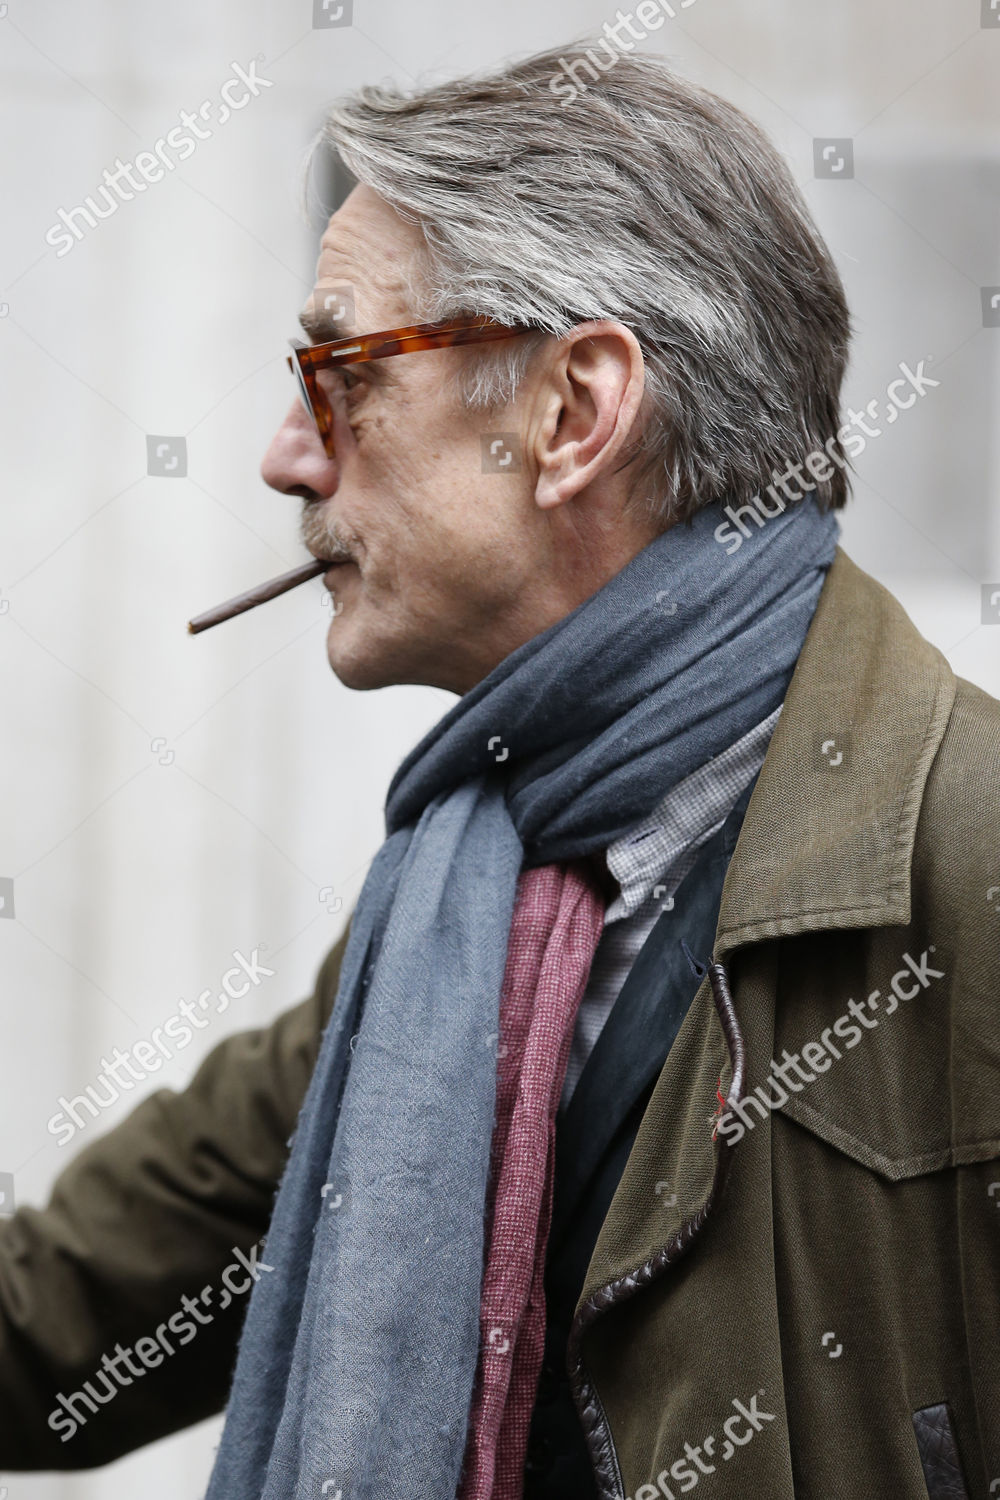 Jeremy Irons sigara içerken (veya esrar)
